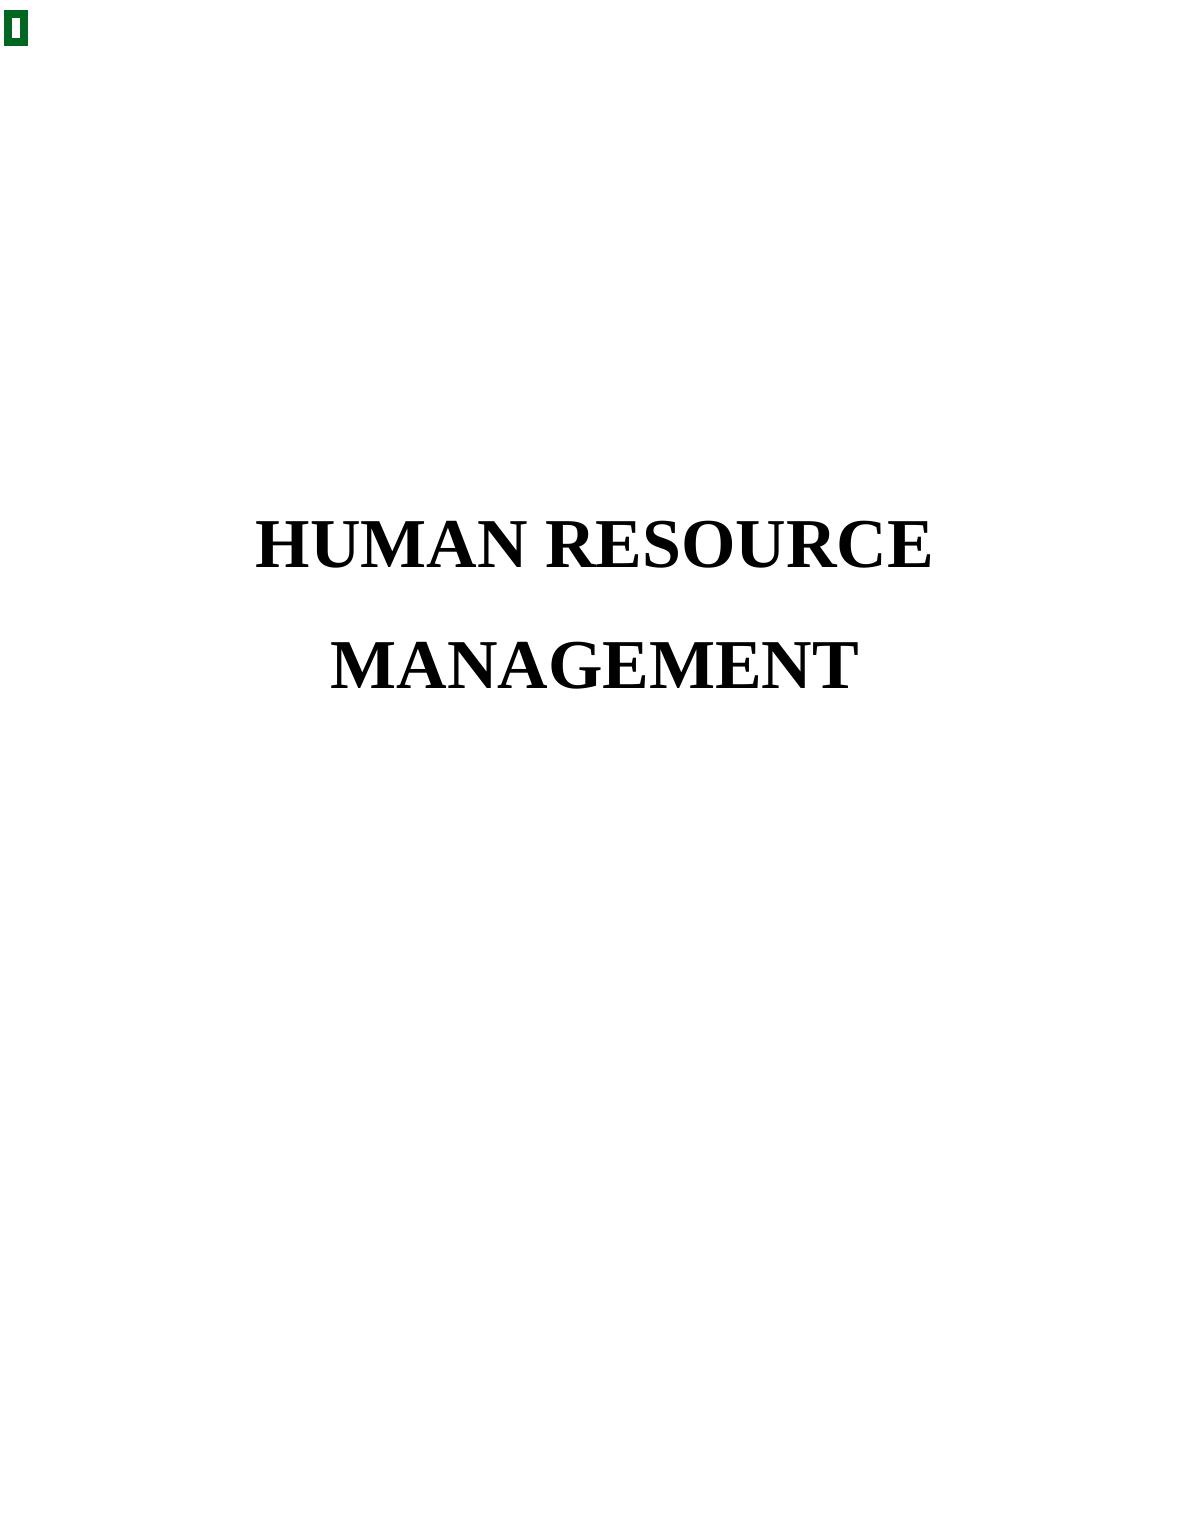 Human Resource Management Introduction: Human Resource Management_1